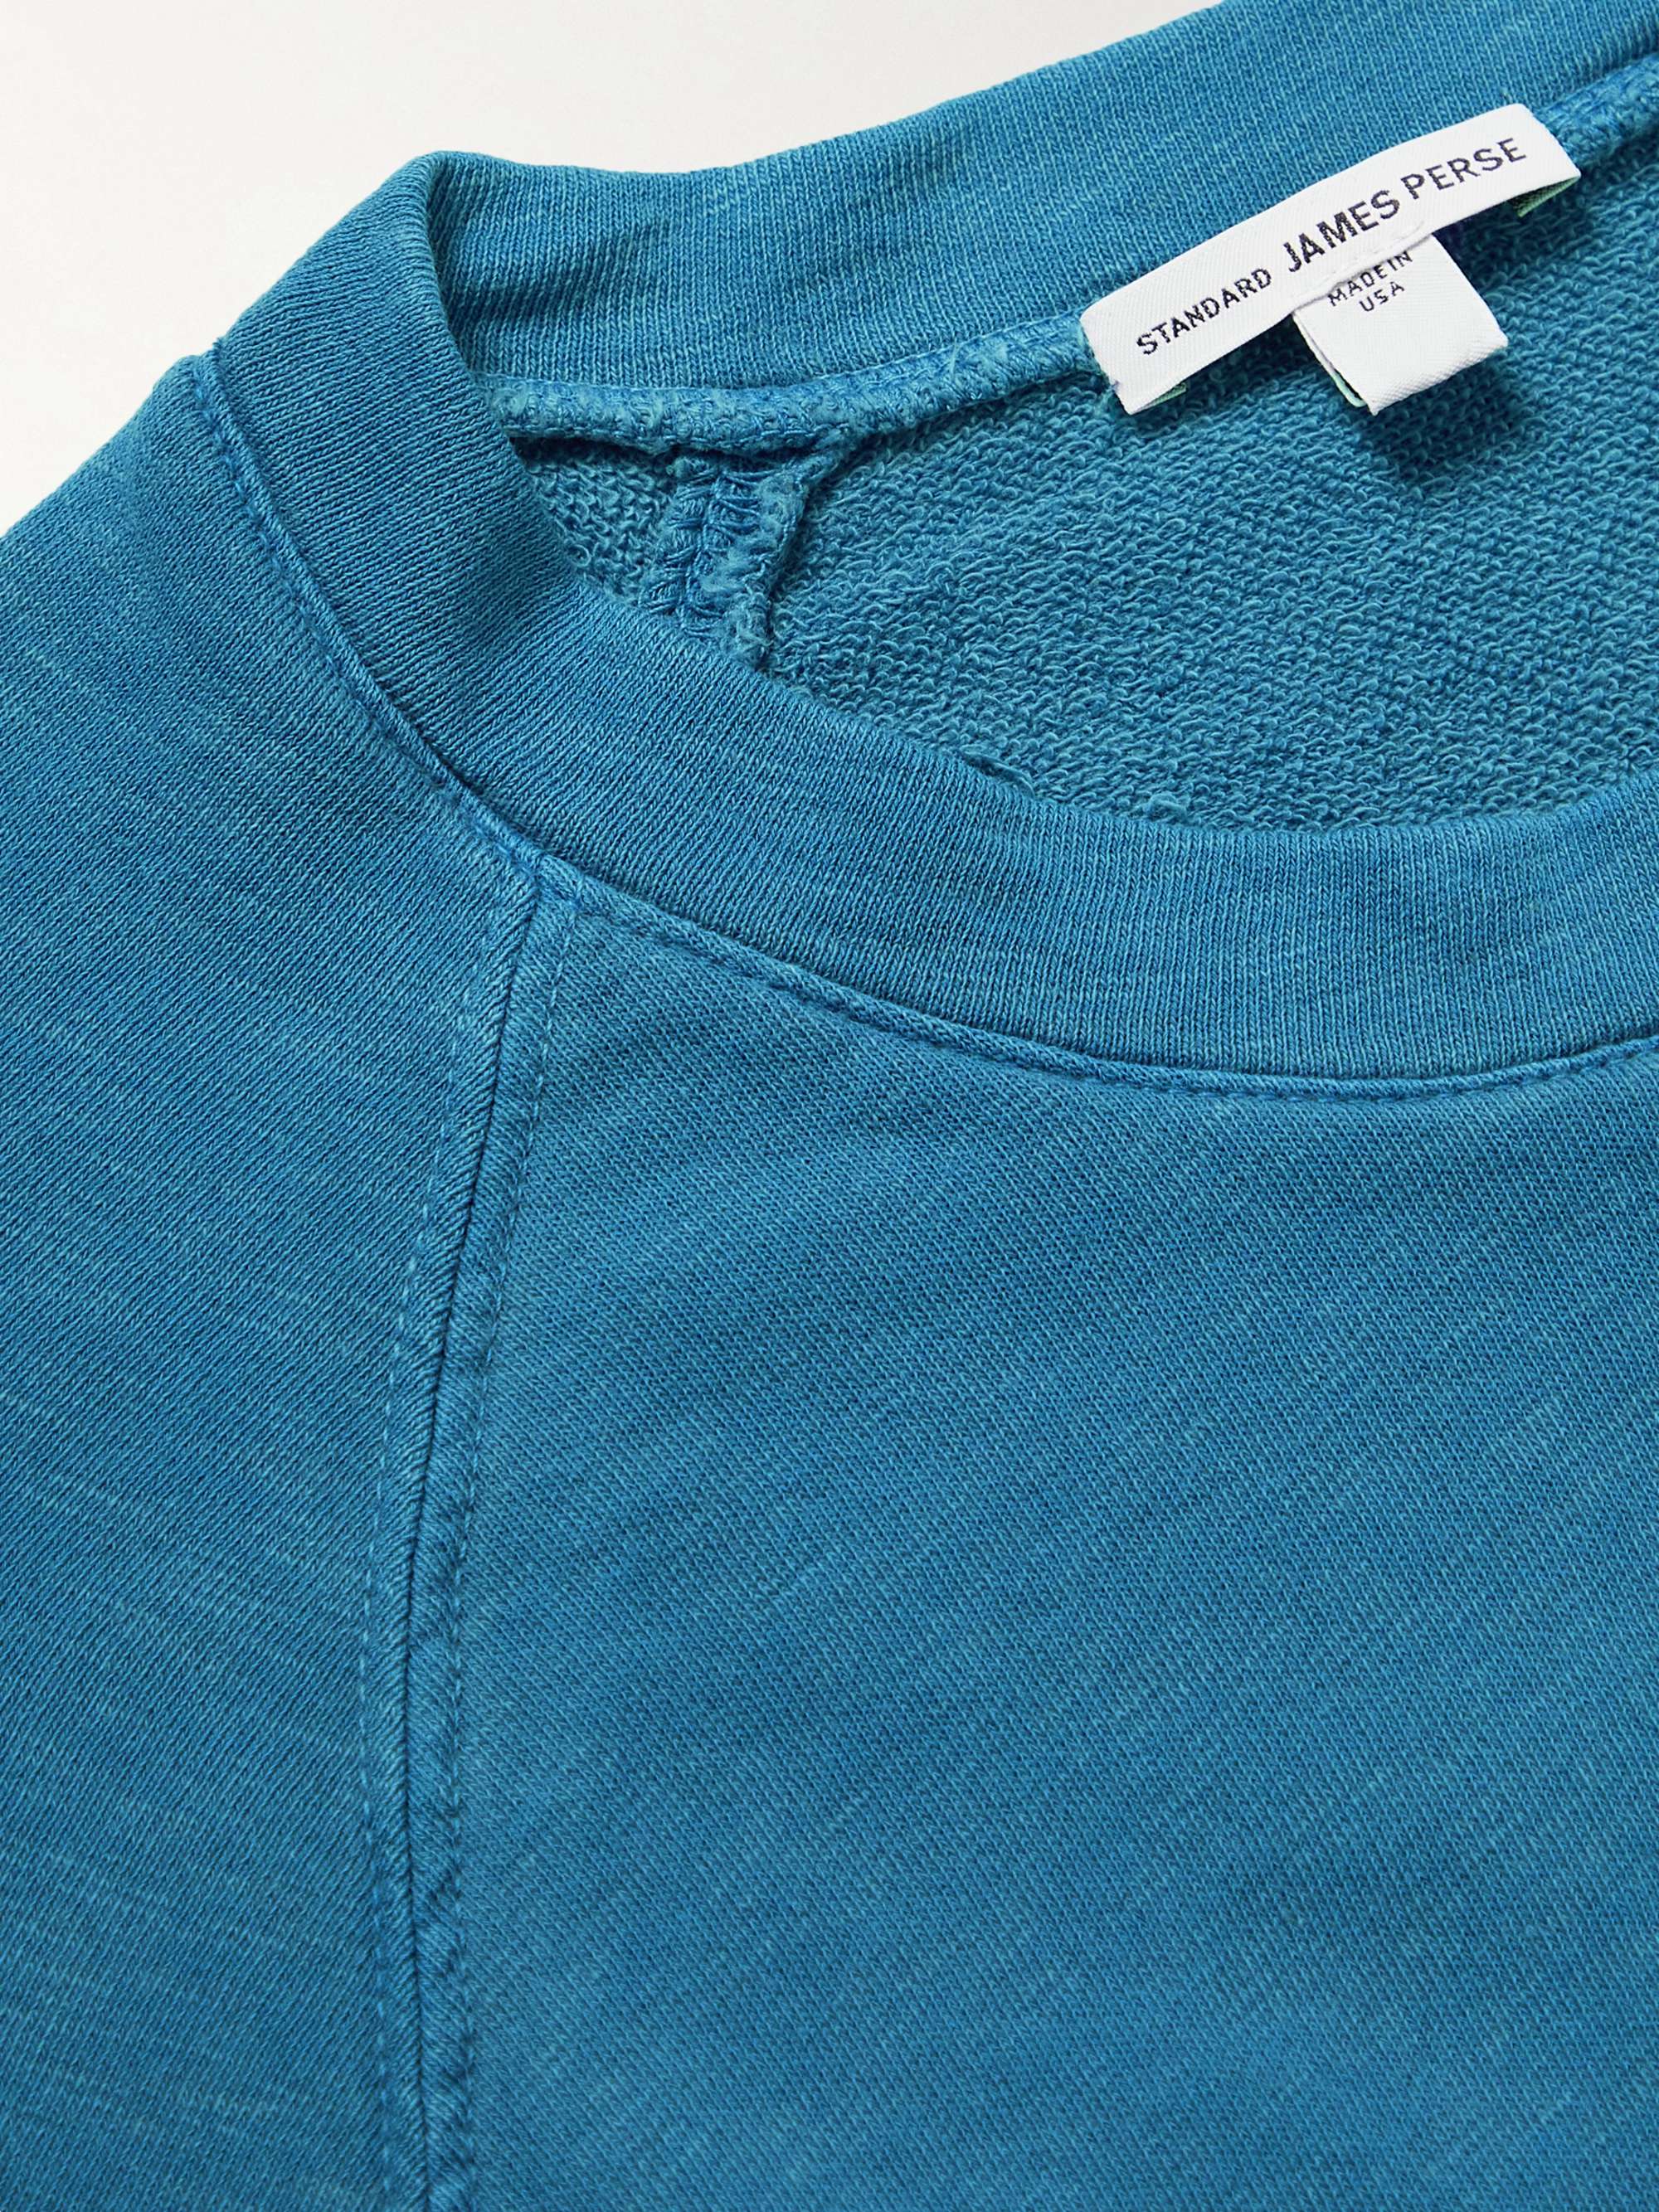 Blue Supima Cotton-Jersey Sweatshirt | JAMES PERSE | MR PORTER